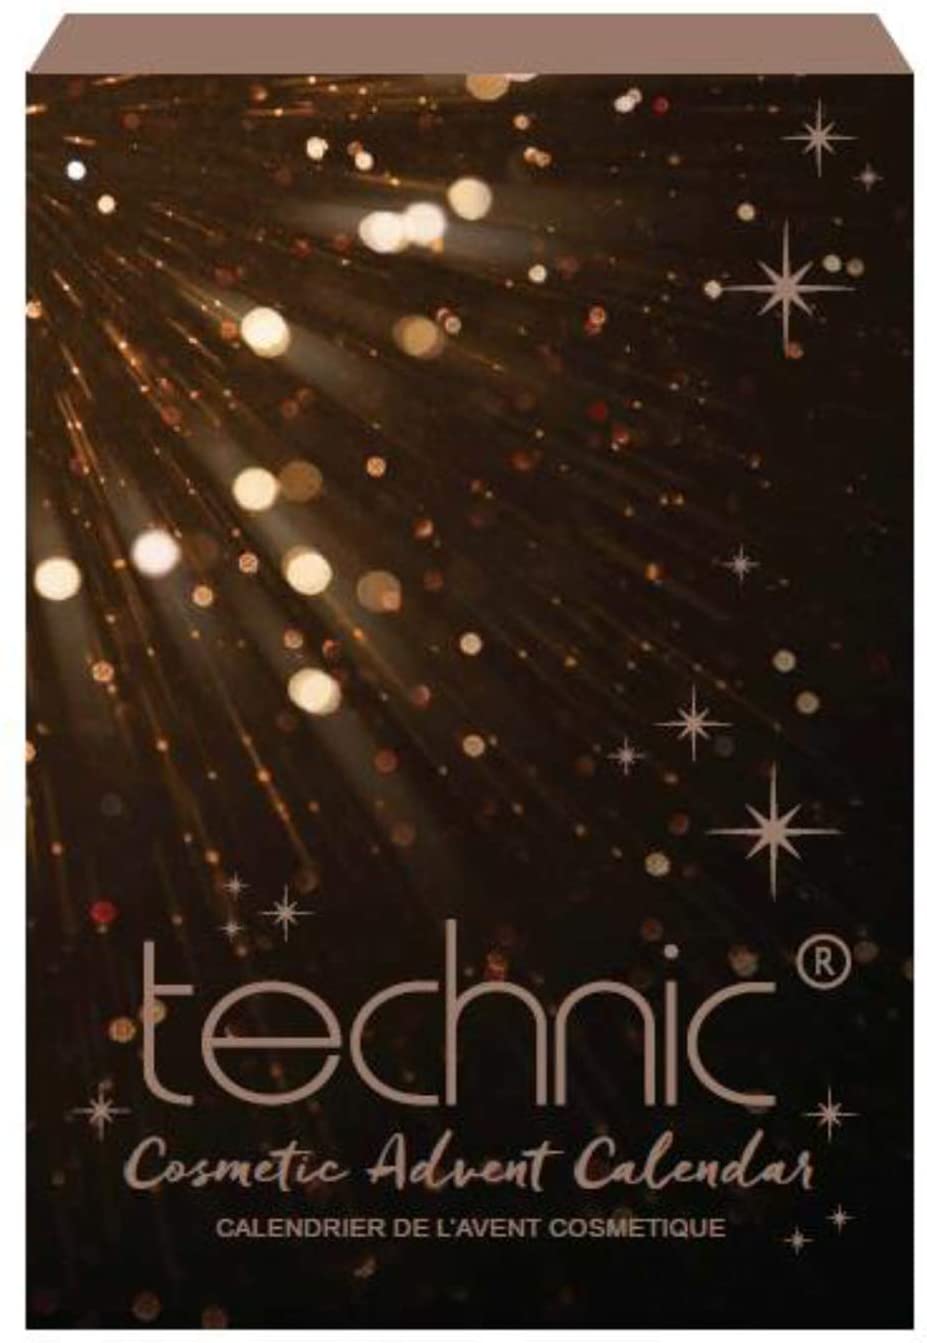 Technic Cosmetic Advent Calendar